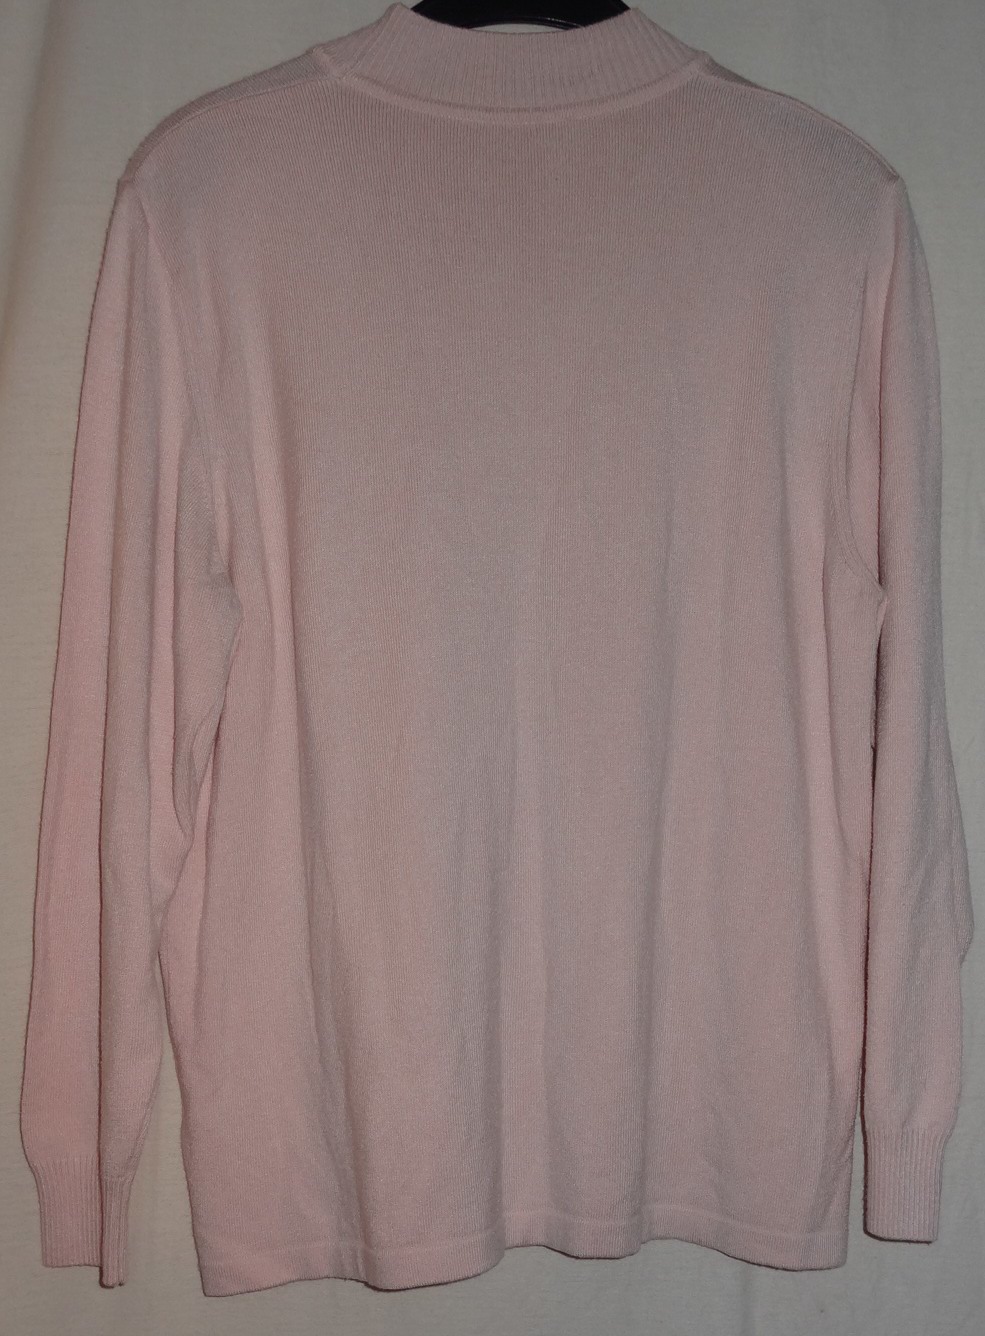 K Pullover Gr. 42 rosa feinstrick Langarm 45Modal 50Polyacry 15Polyamid wenig getragen einwandfrei e